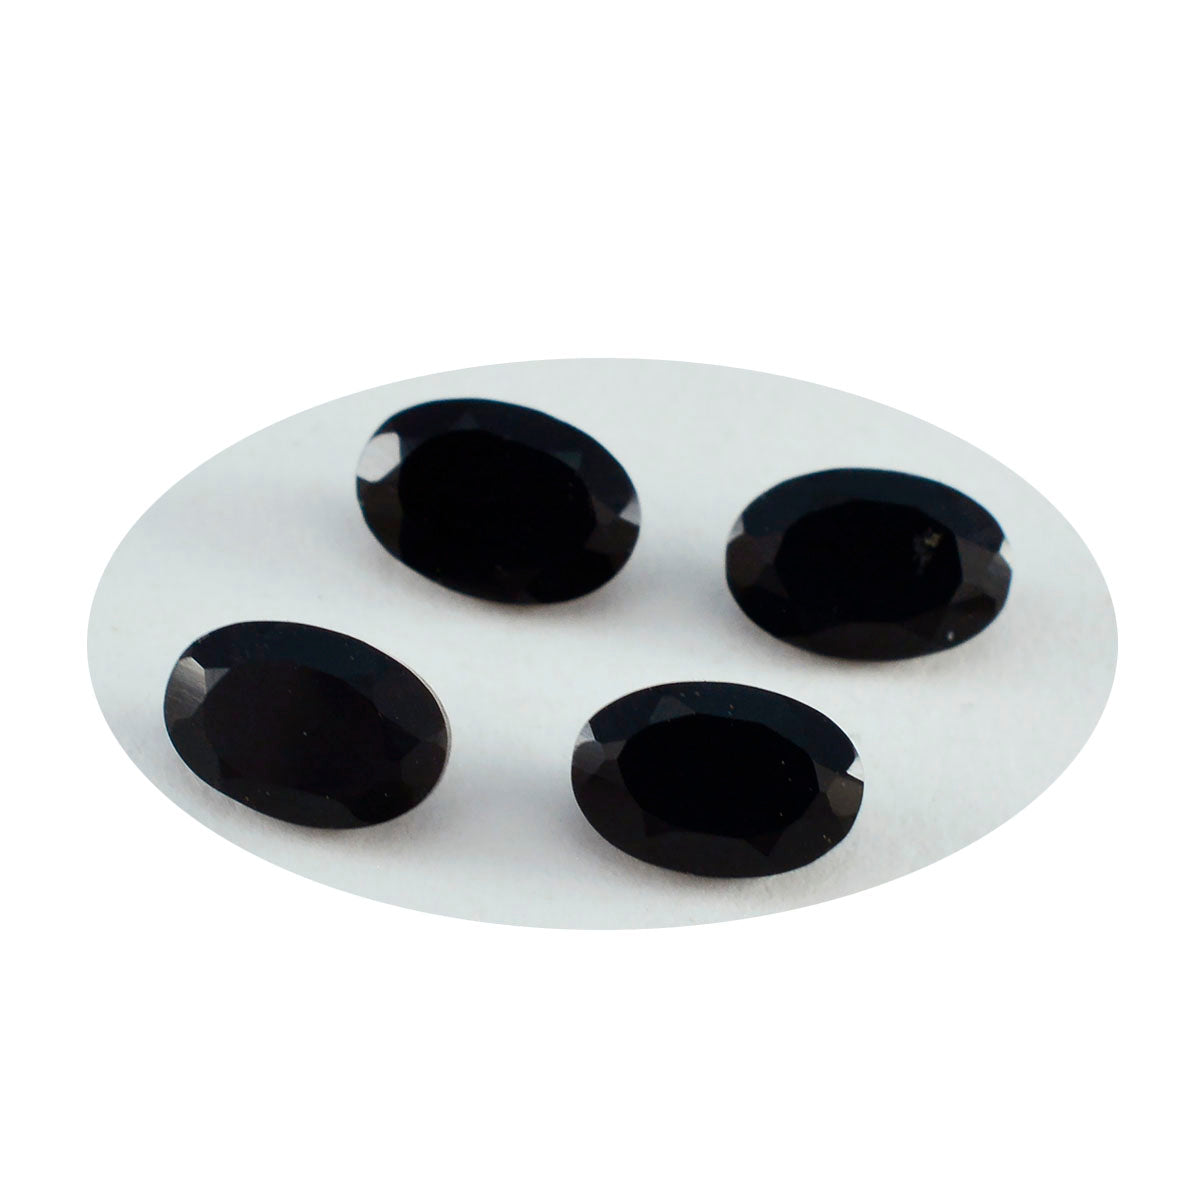 Riyogems 1PC Real Black Onyx Faceted 3x5 mm Oval Shape lovely Quality Gemstone